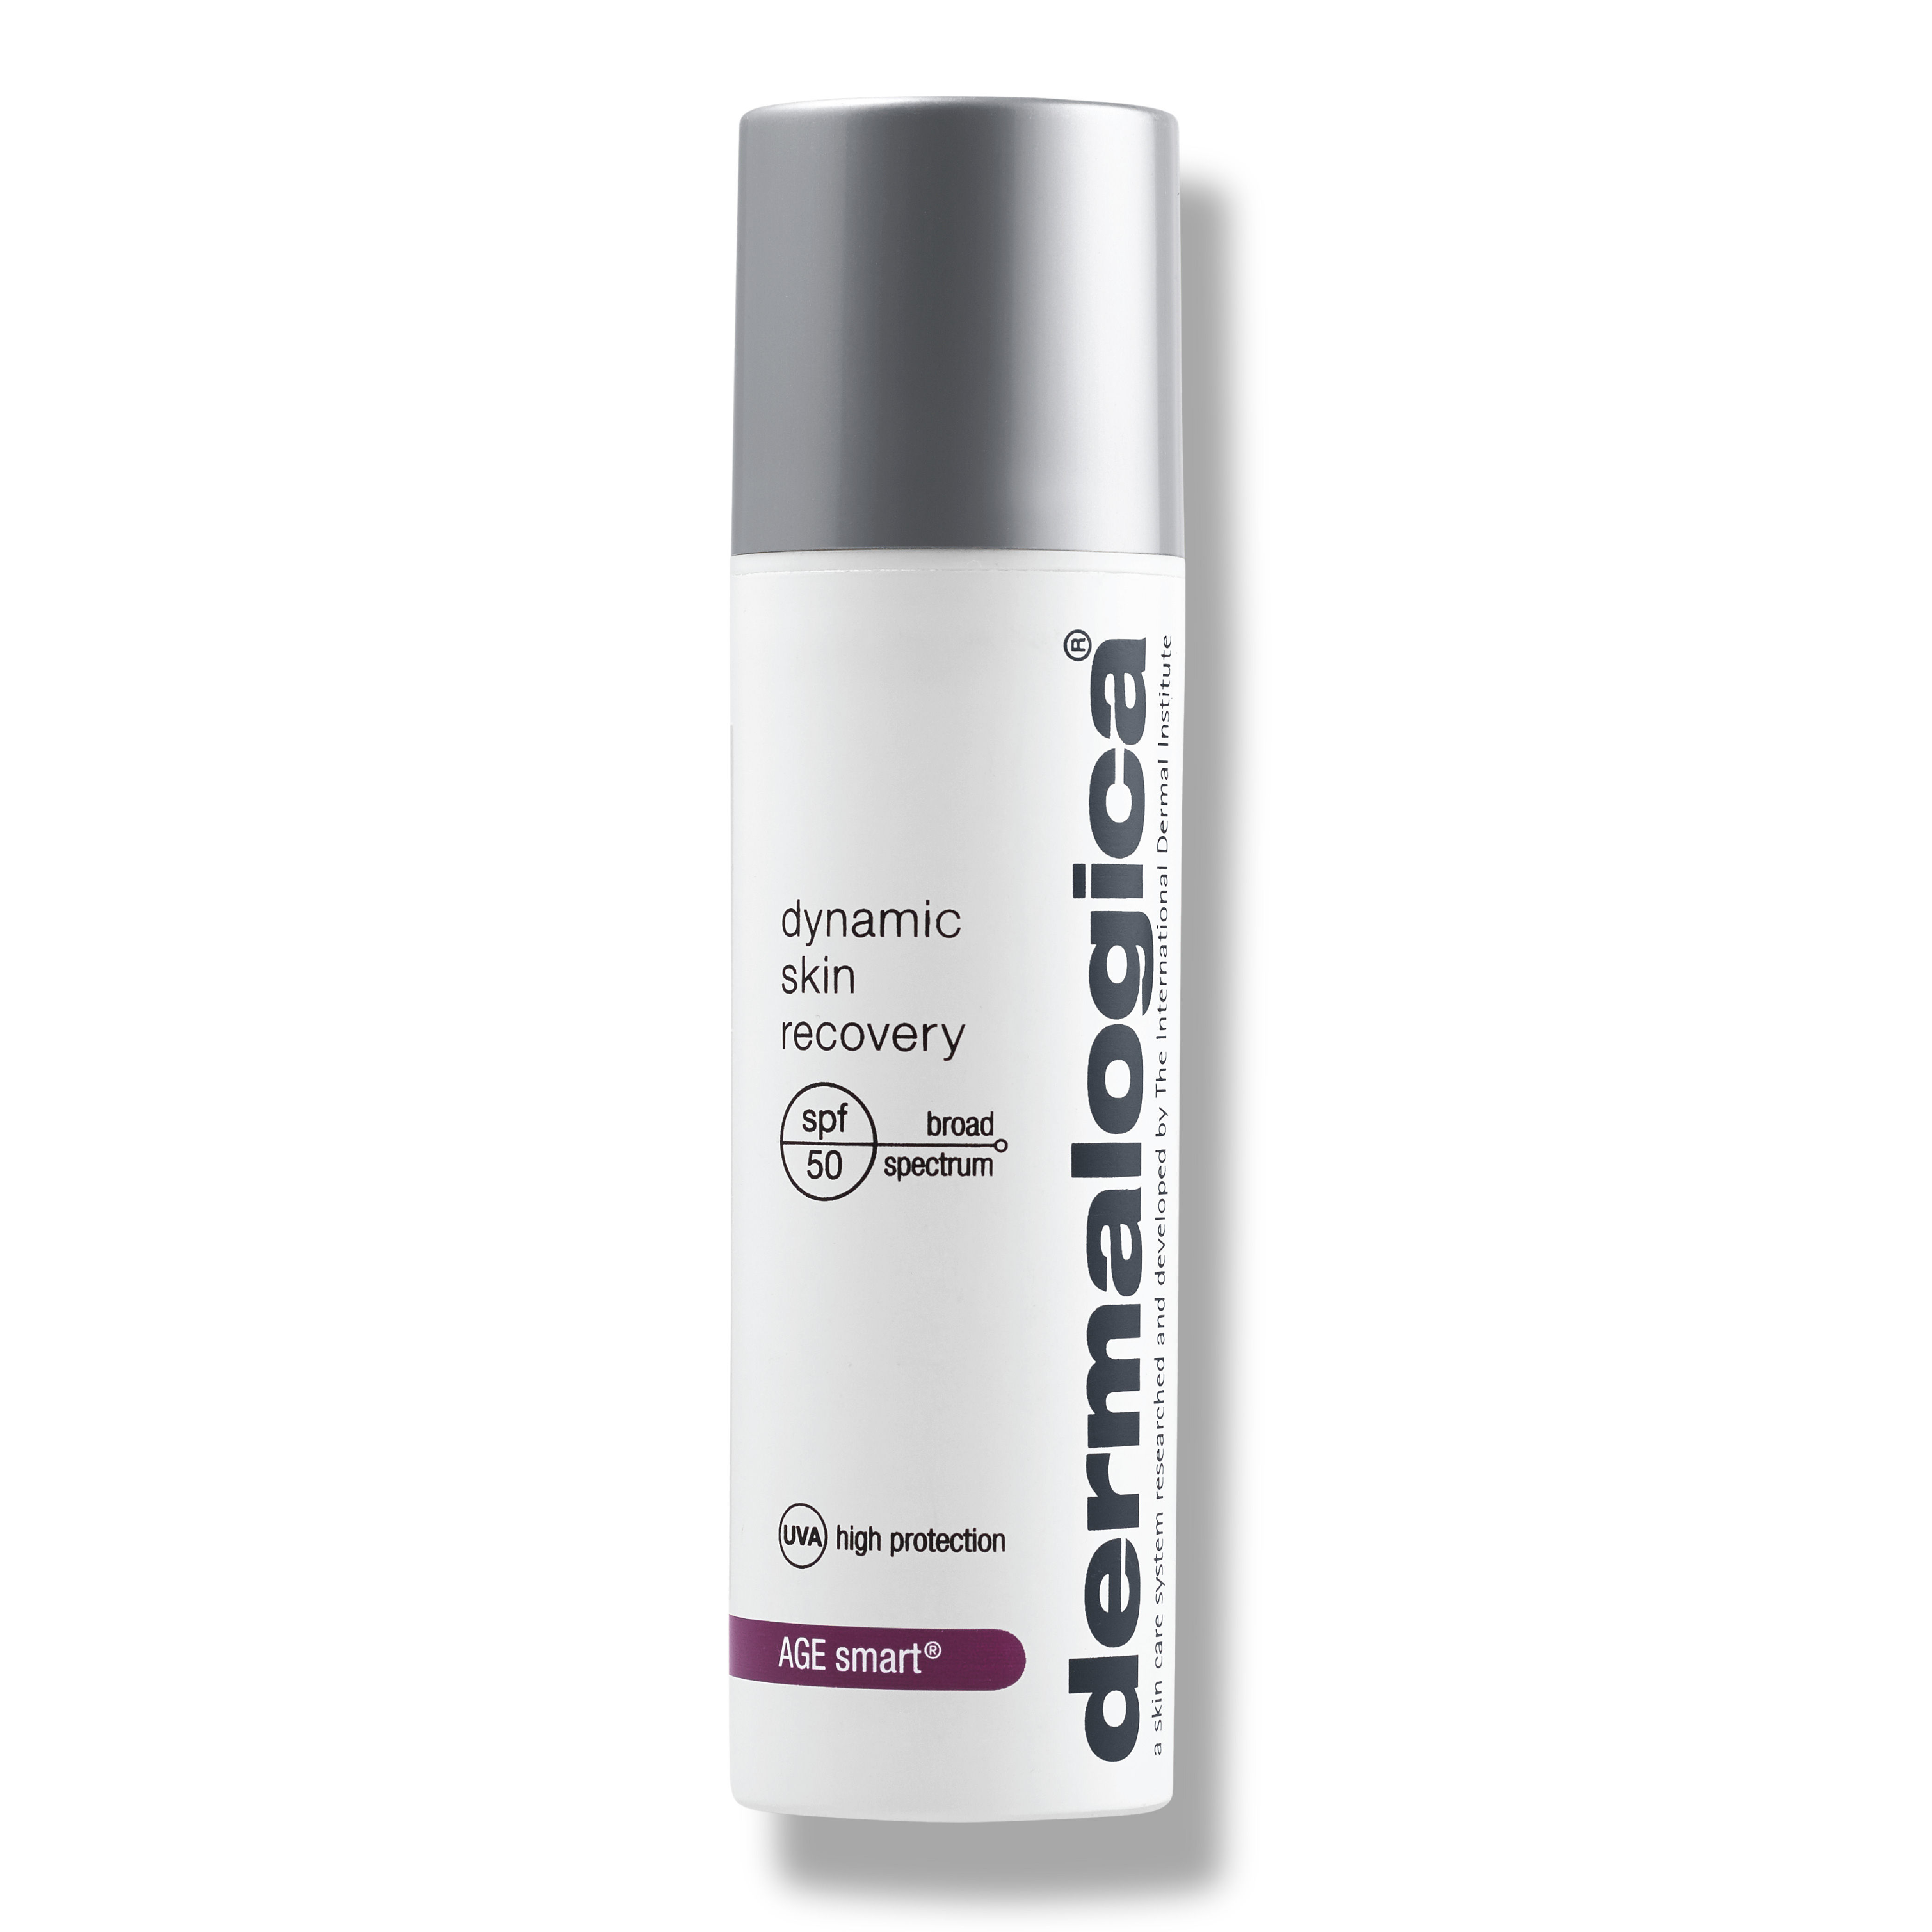 Dermalogica Dynamic Skin Recovery SPF 50 Face Moisturiser & Sunscreen With Oleosome Technology